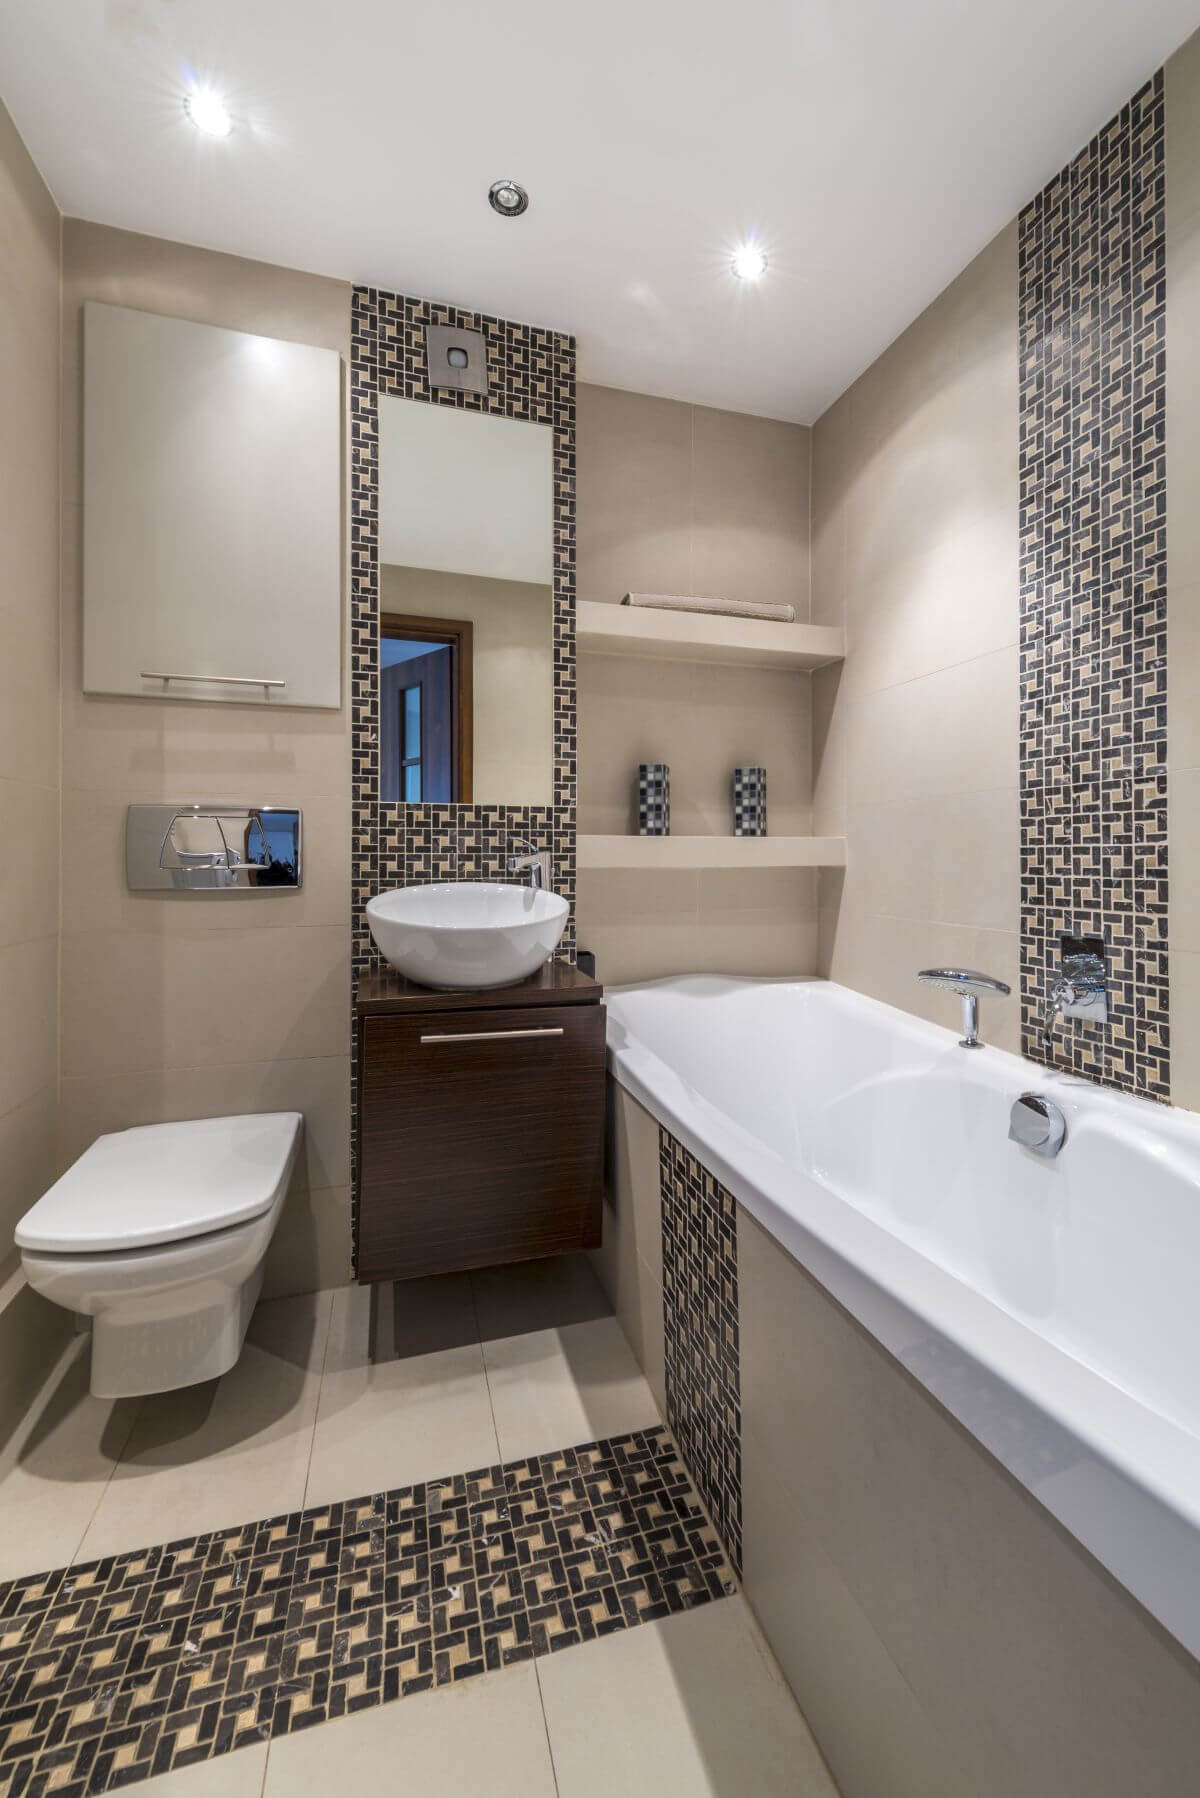 Small Full Bathroom Ideas
 32 Best Small Bathroom Design Ideas and Decorations for 2020